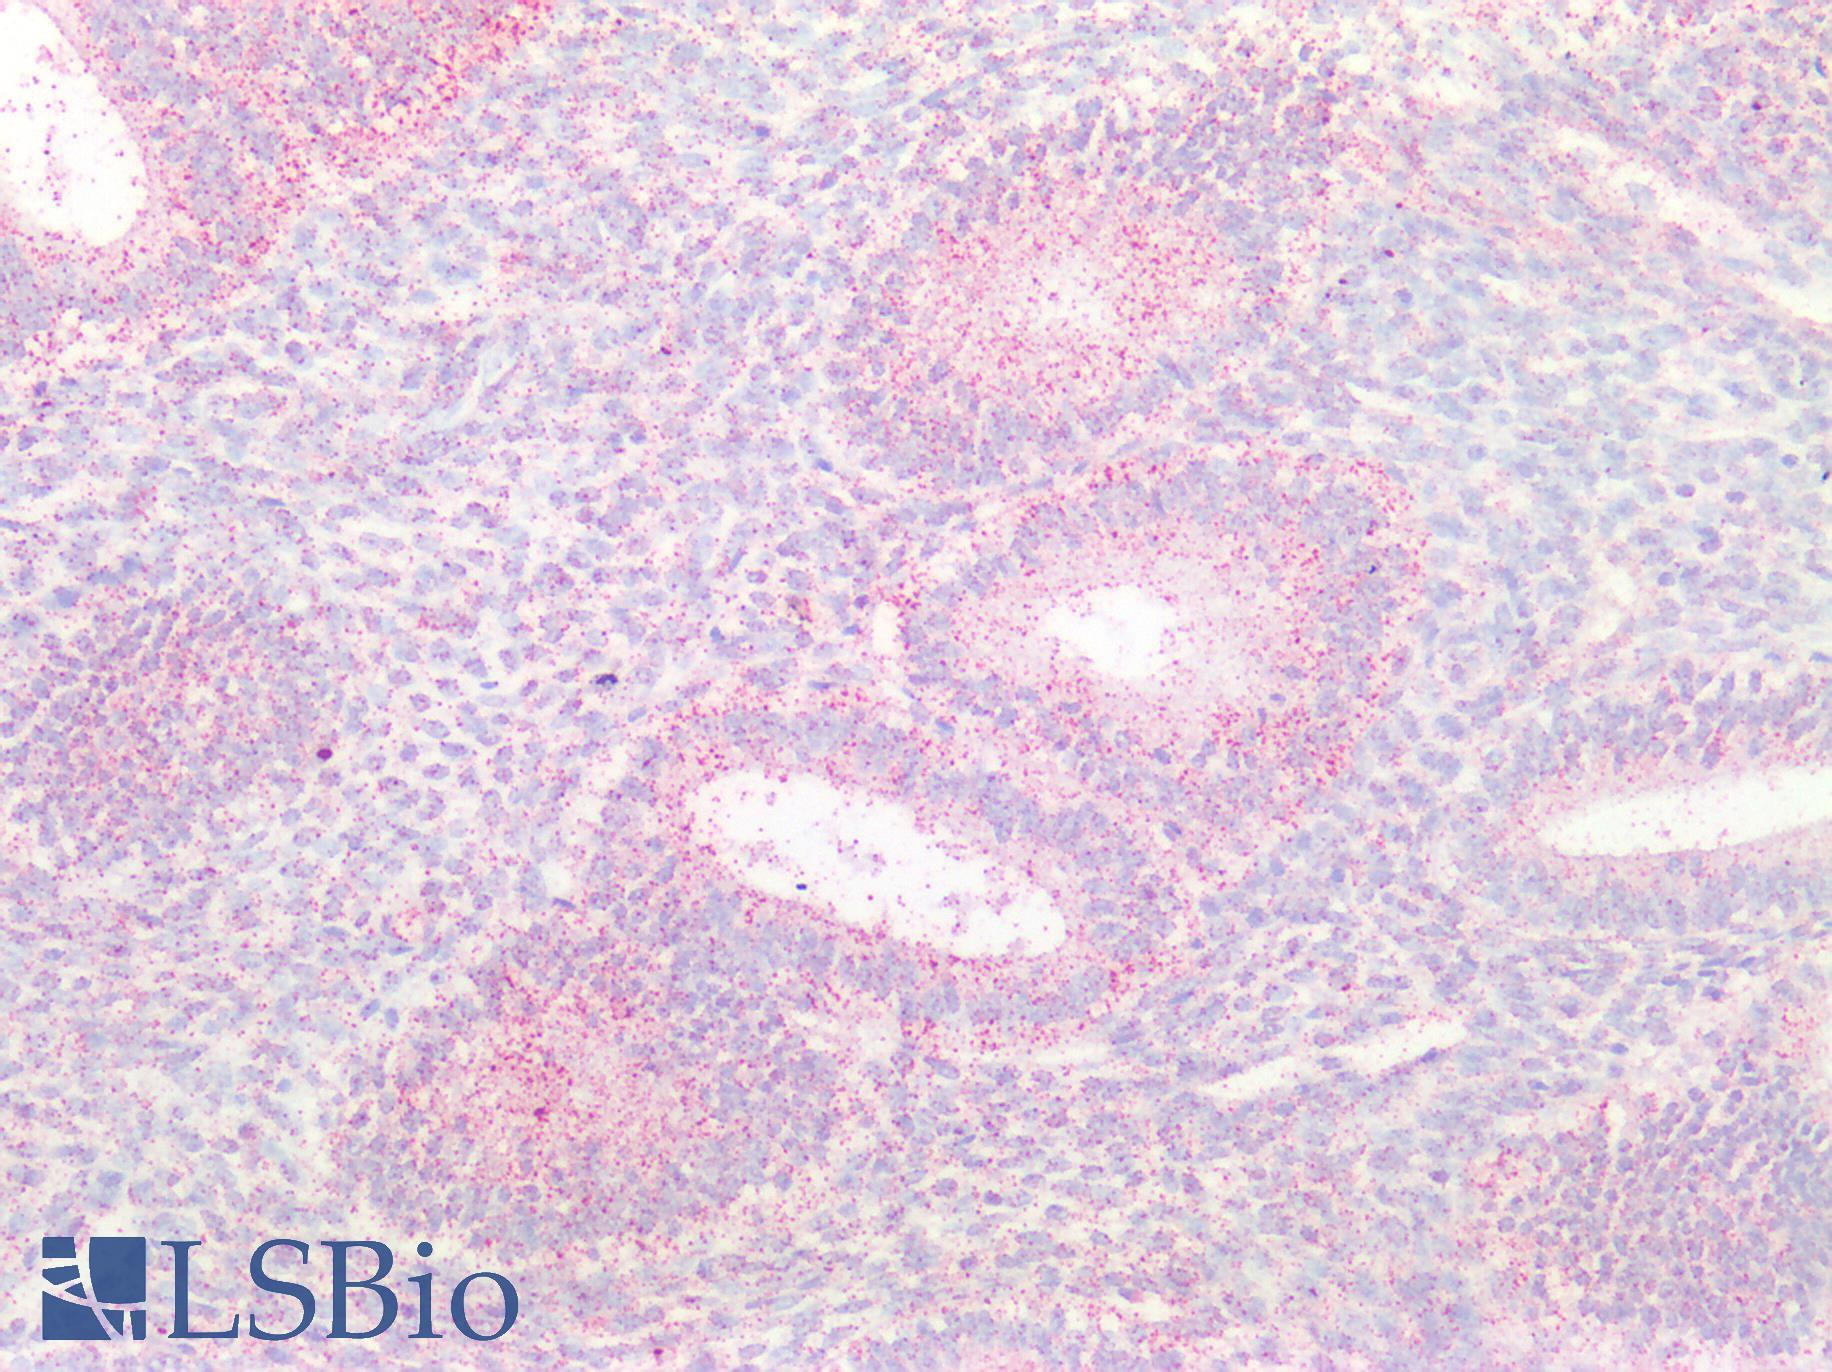 CTSB / Cathepsin B Antibody - Human Uterus: Formalin-Fixed, Paraffin-Embedded (FFPE)